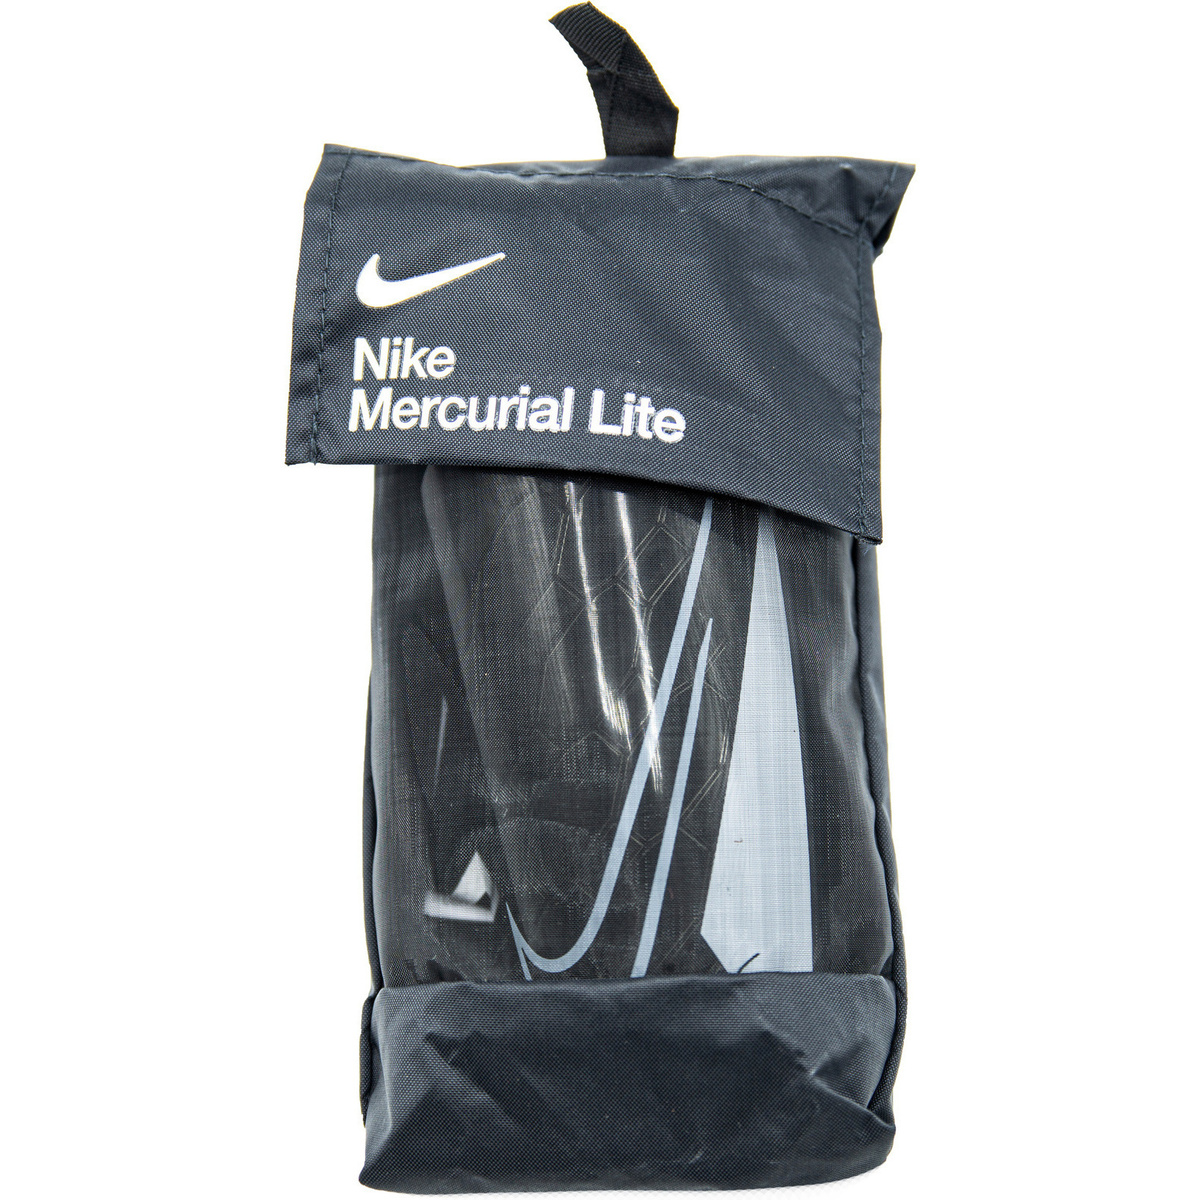 Chaussures Football Nike Mercurial Lite Noir